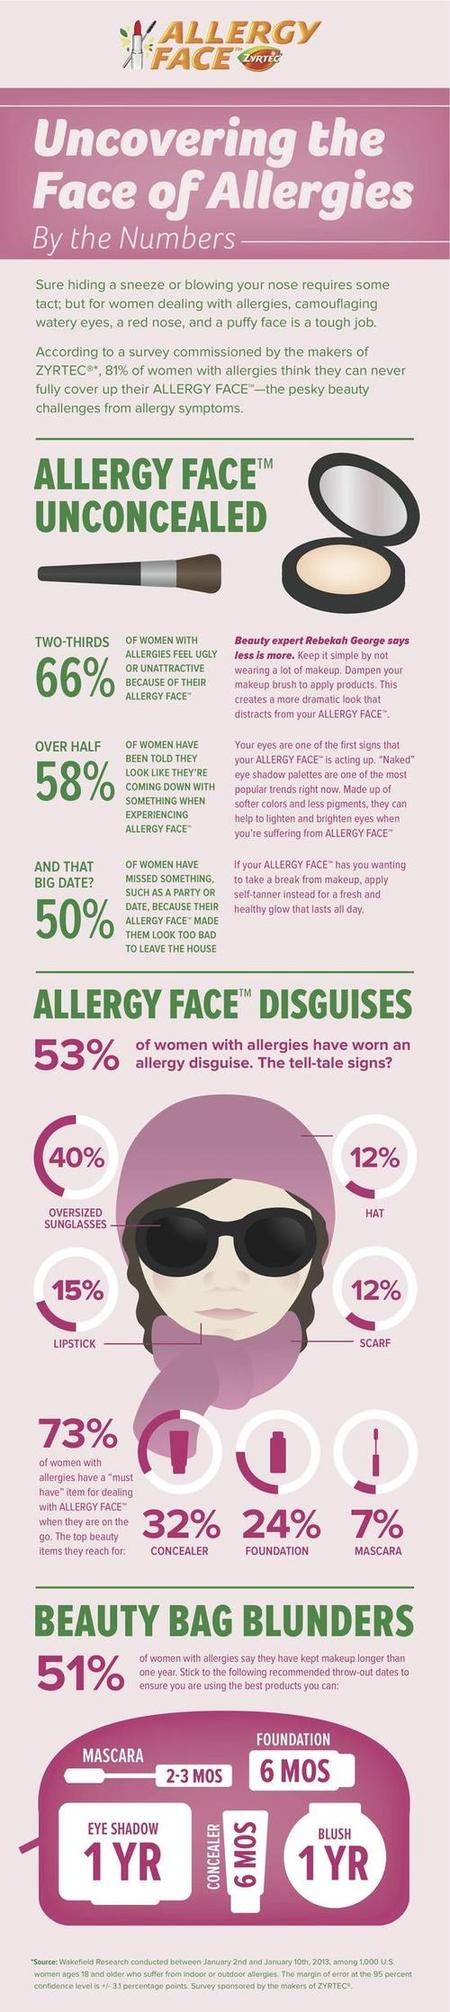 allergy face